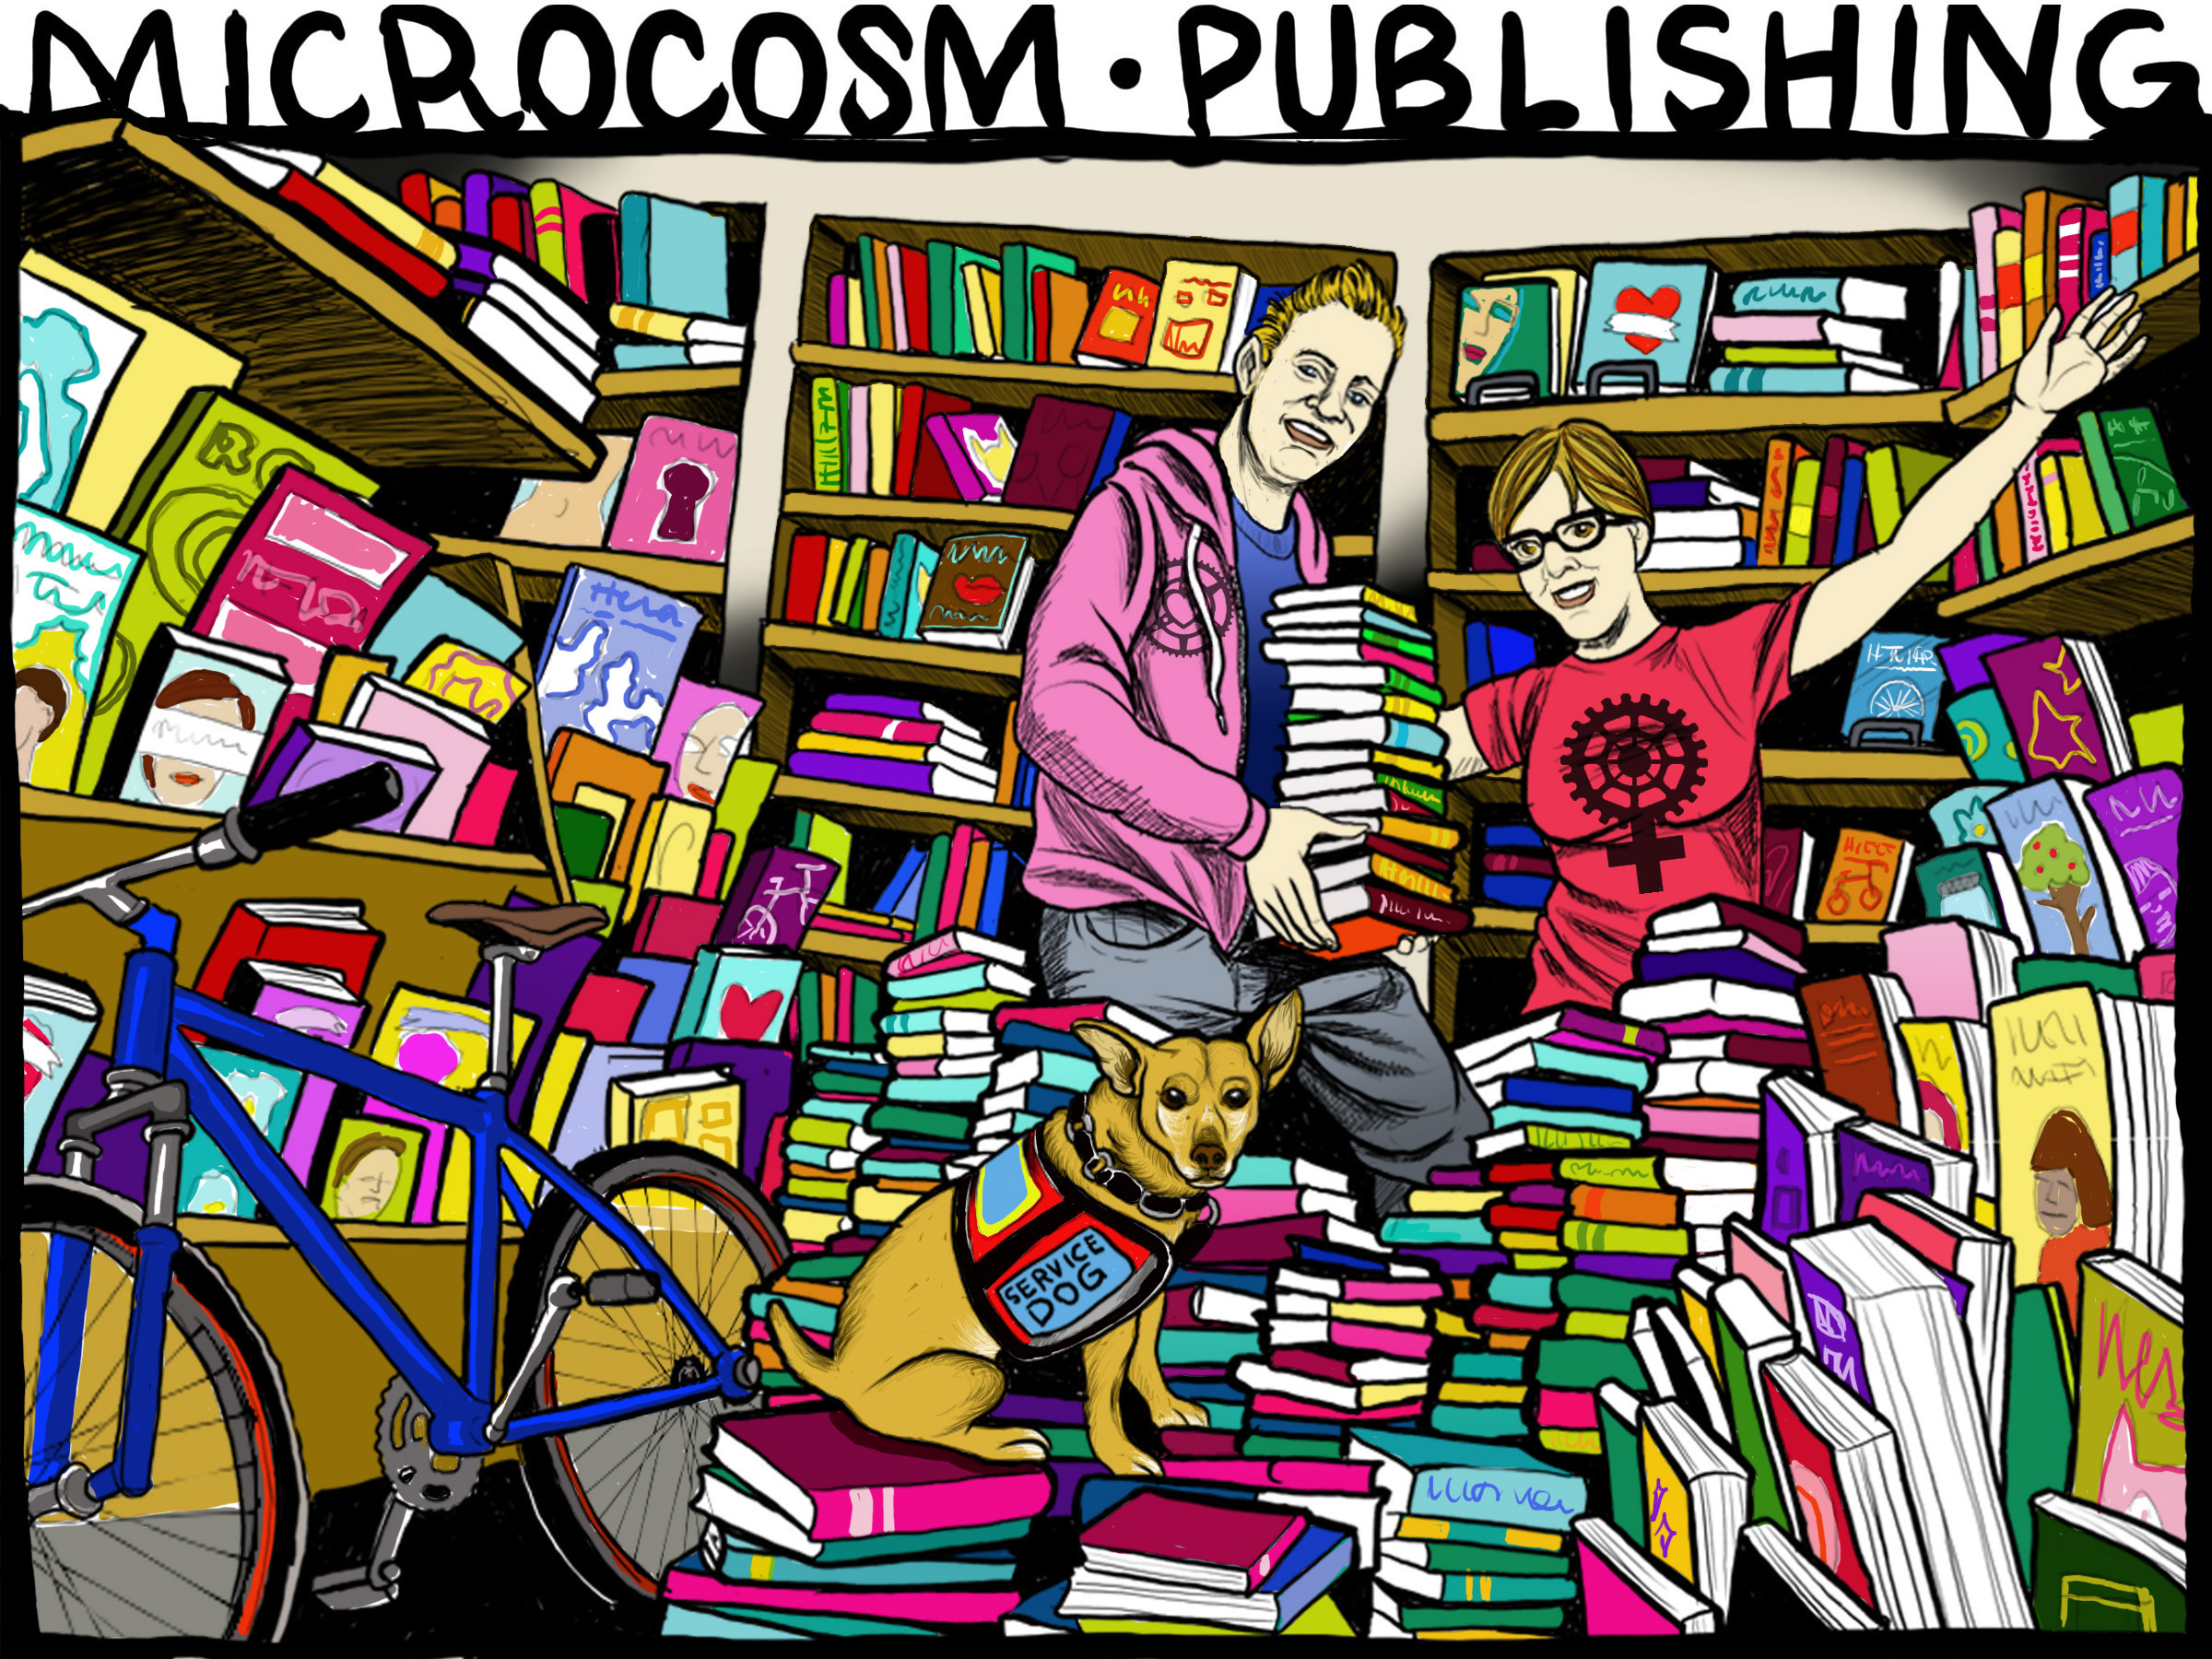 Microcosm Publishing of Portland